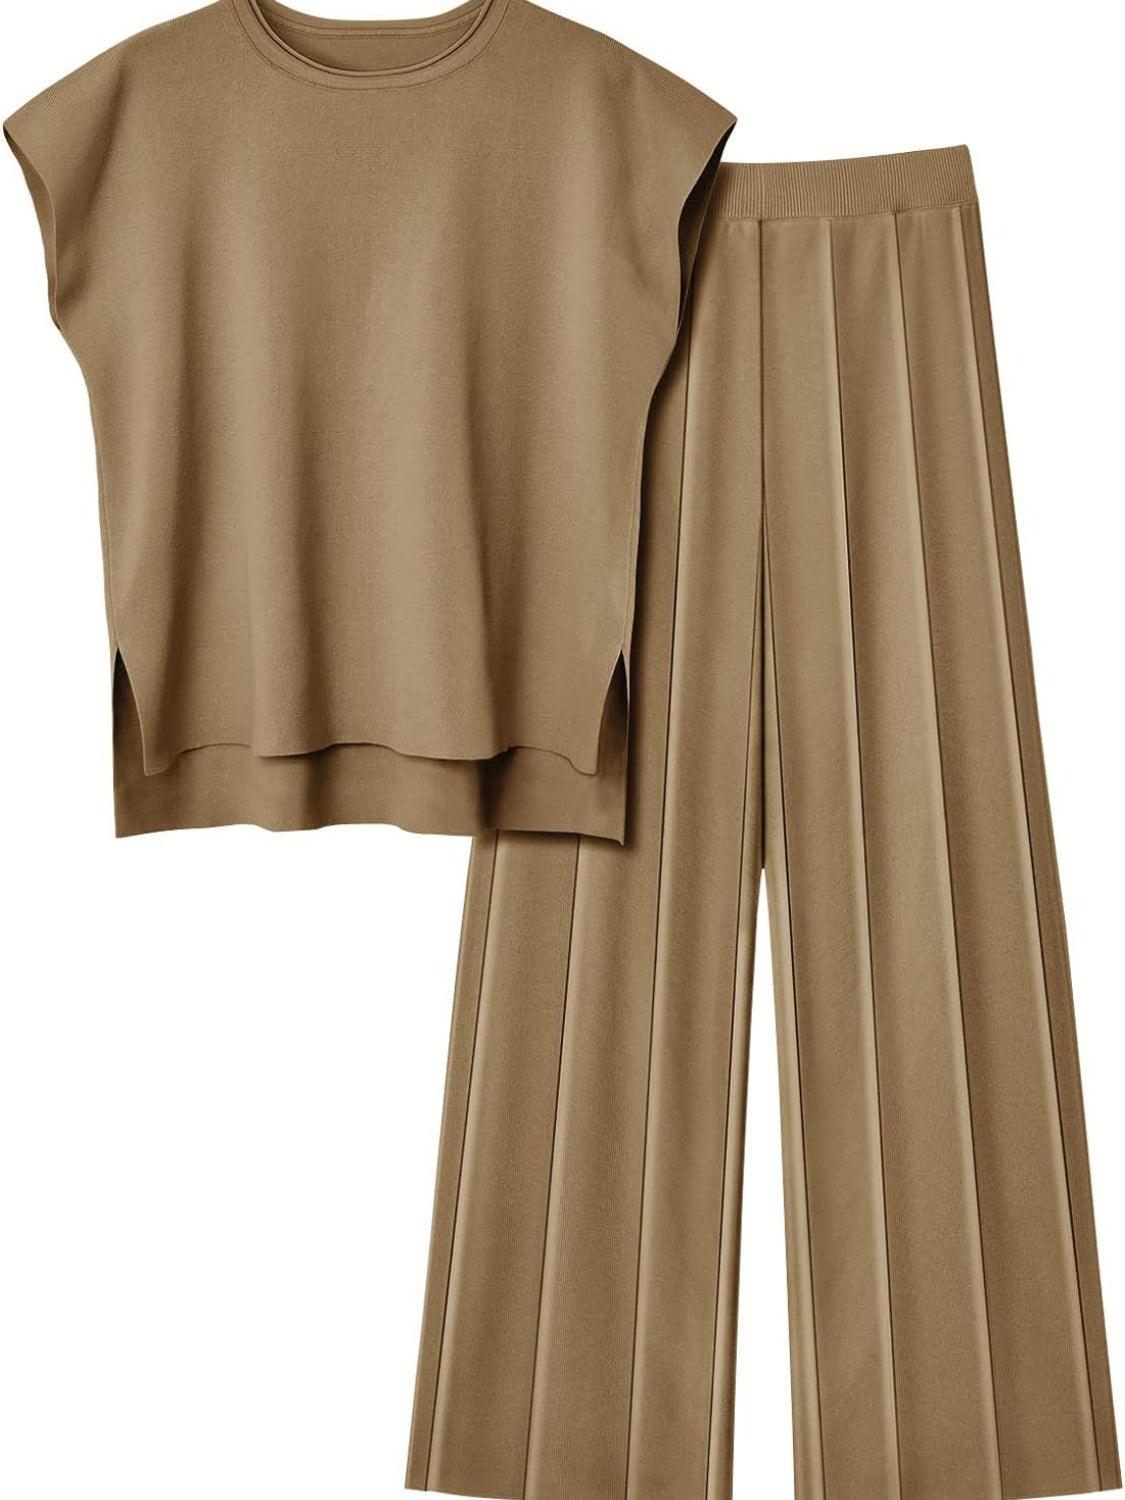 Bona Fide Fashion - Round Neck Cap Sleeve Top and Bottom Knit Set - Women Fashion - Bona Fide Fashion